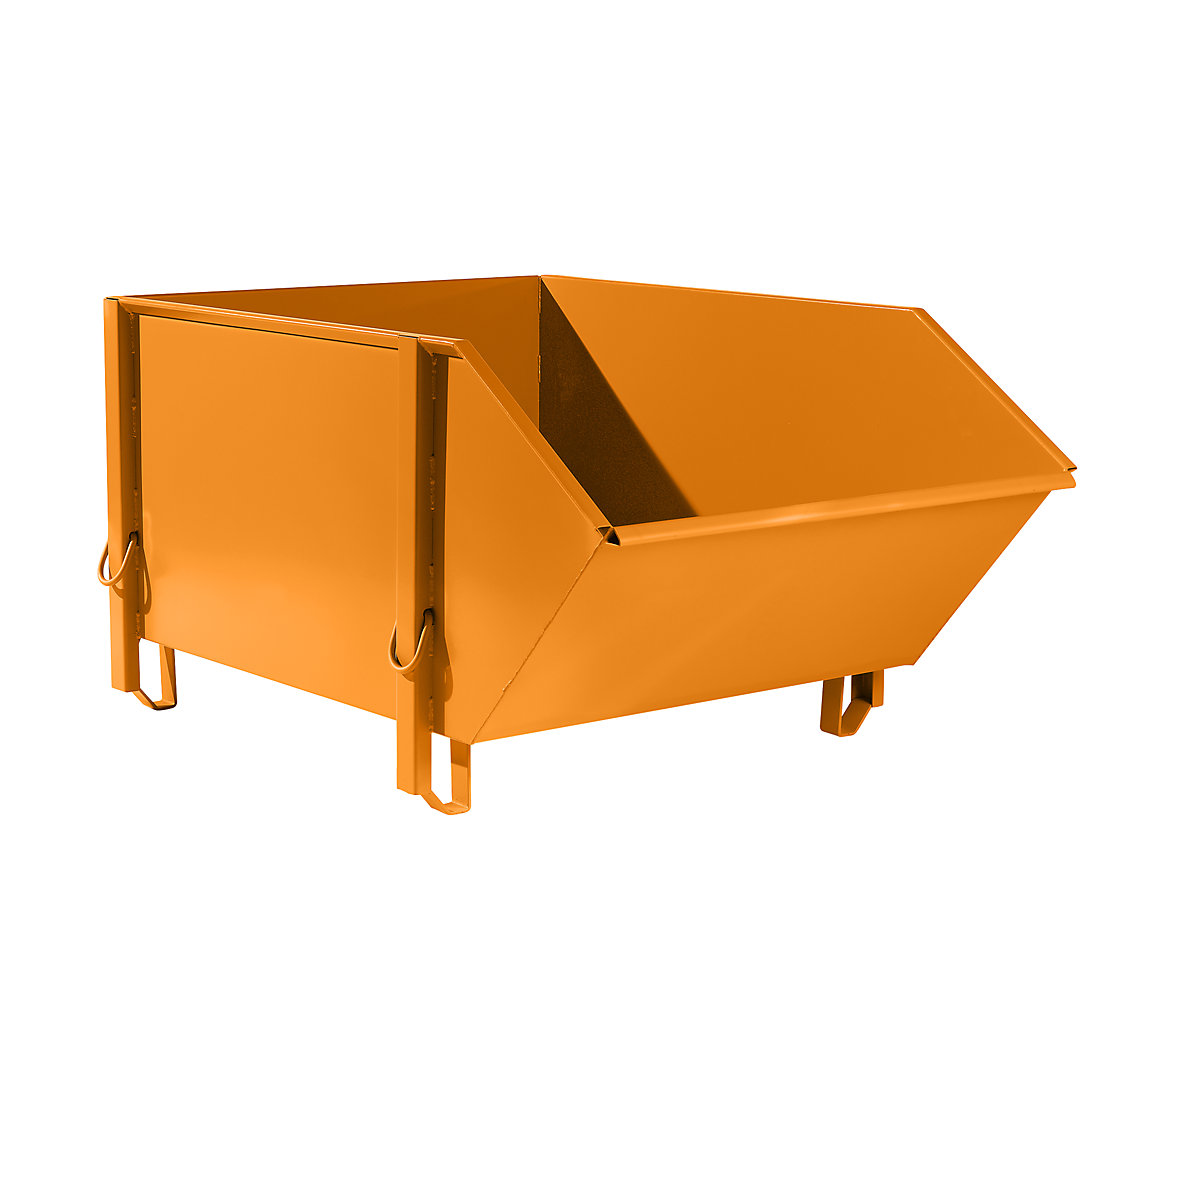 Sheet steel container – eurokraft pro, capacity 1 m³, without folding chute, yellow orange-4